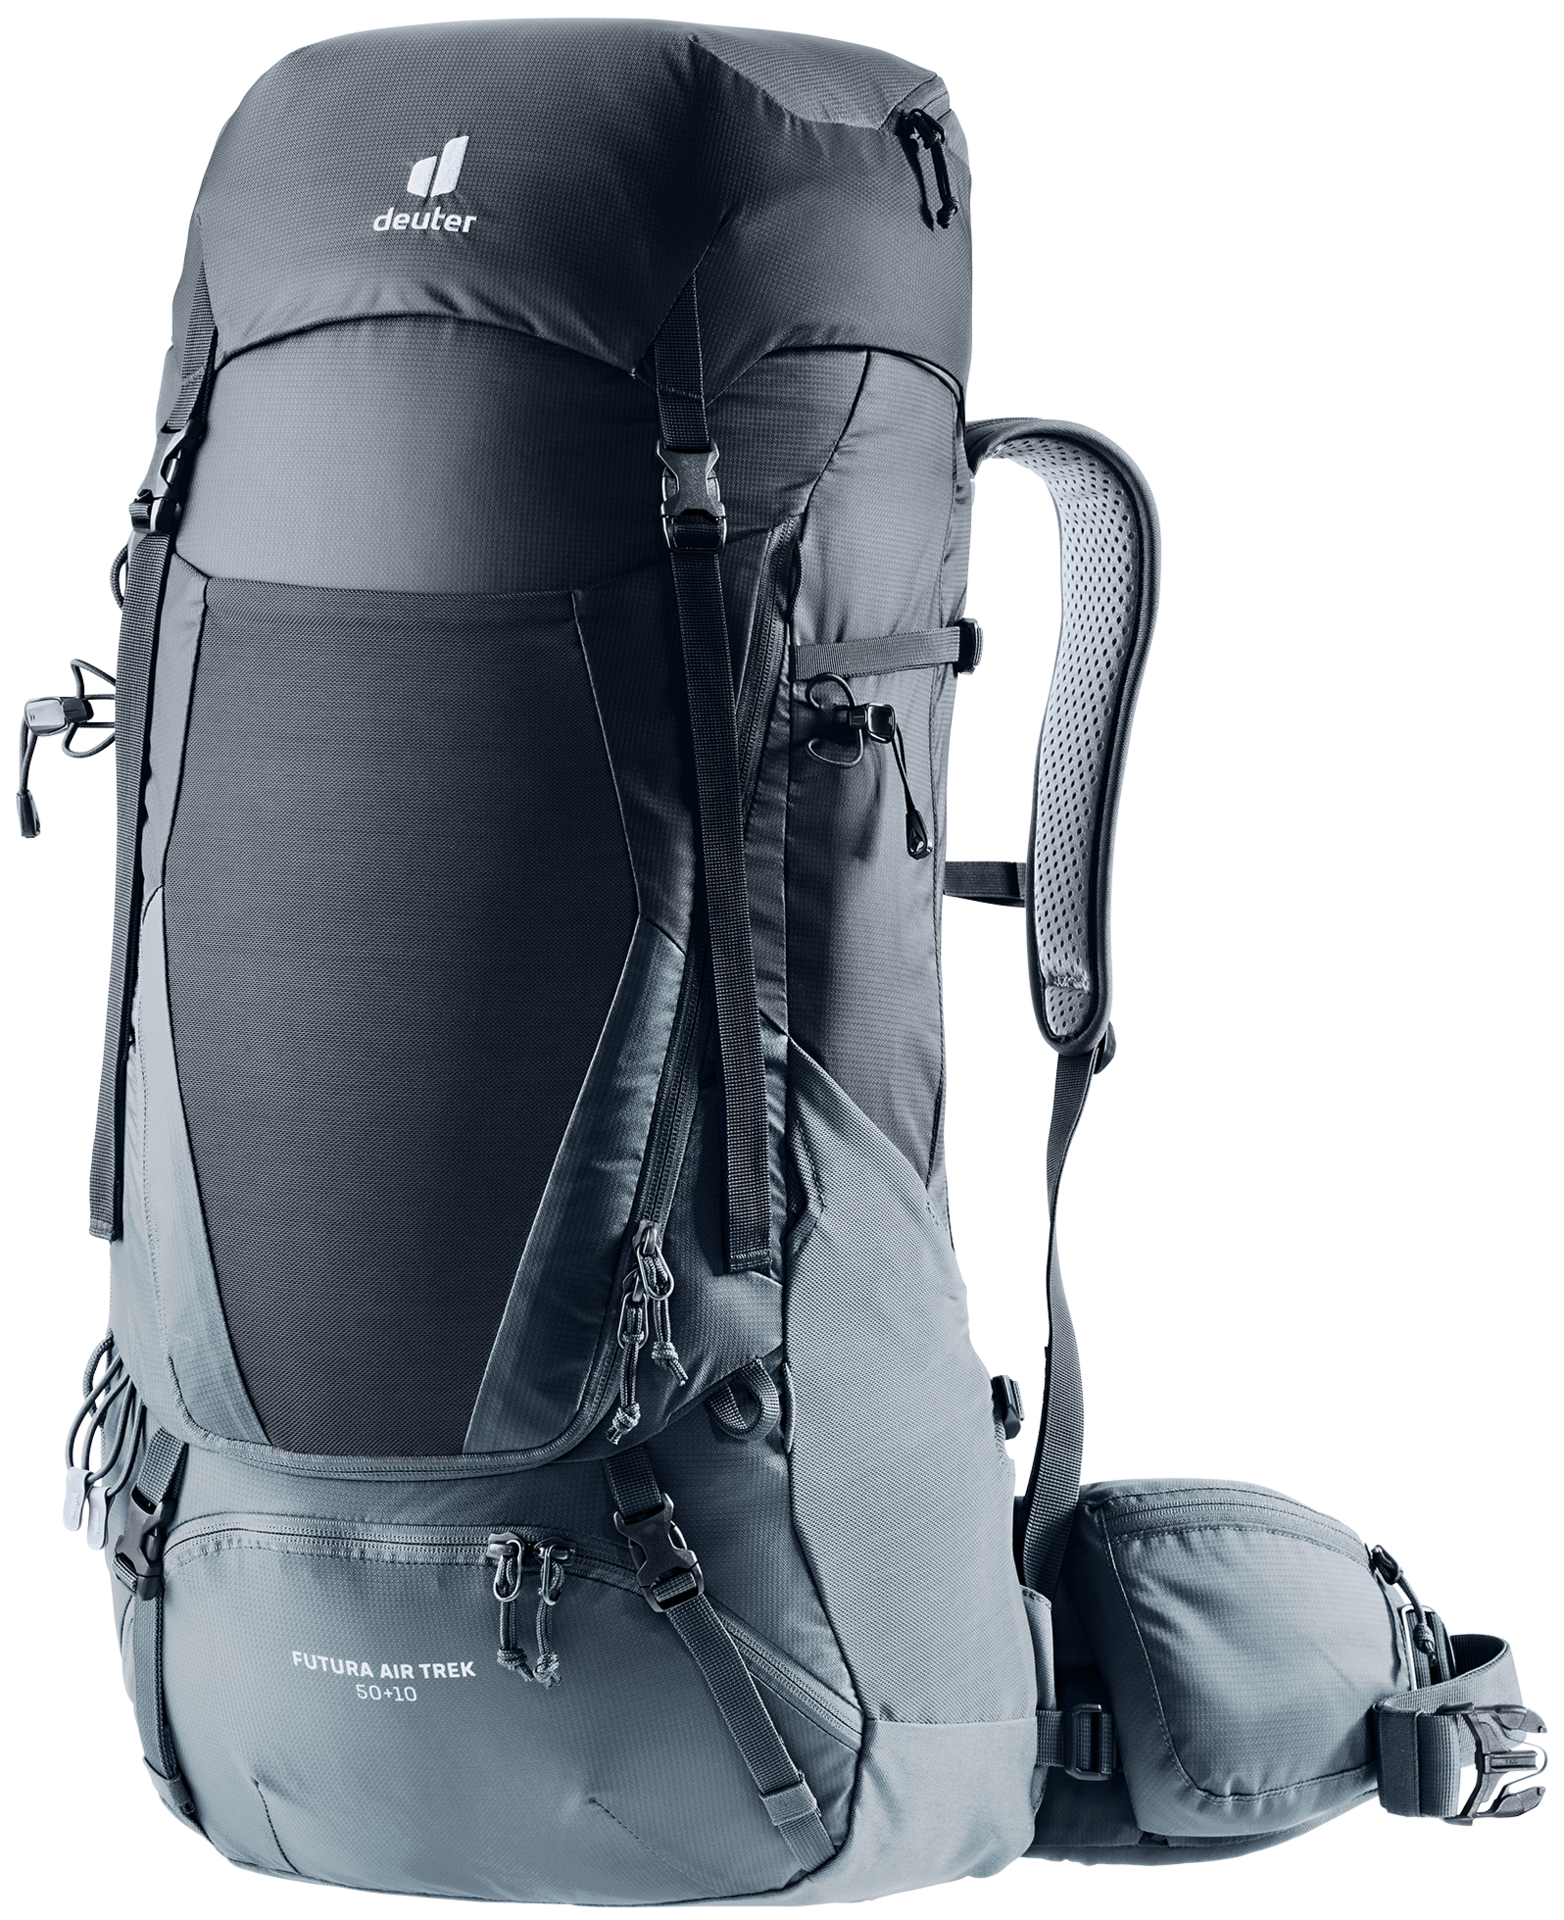 Air backpack Trek deuter 50+10 Futura Trekking |